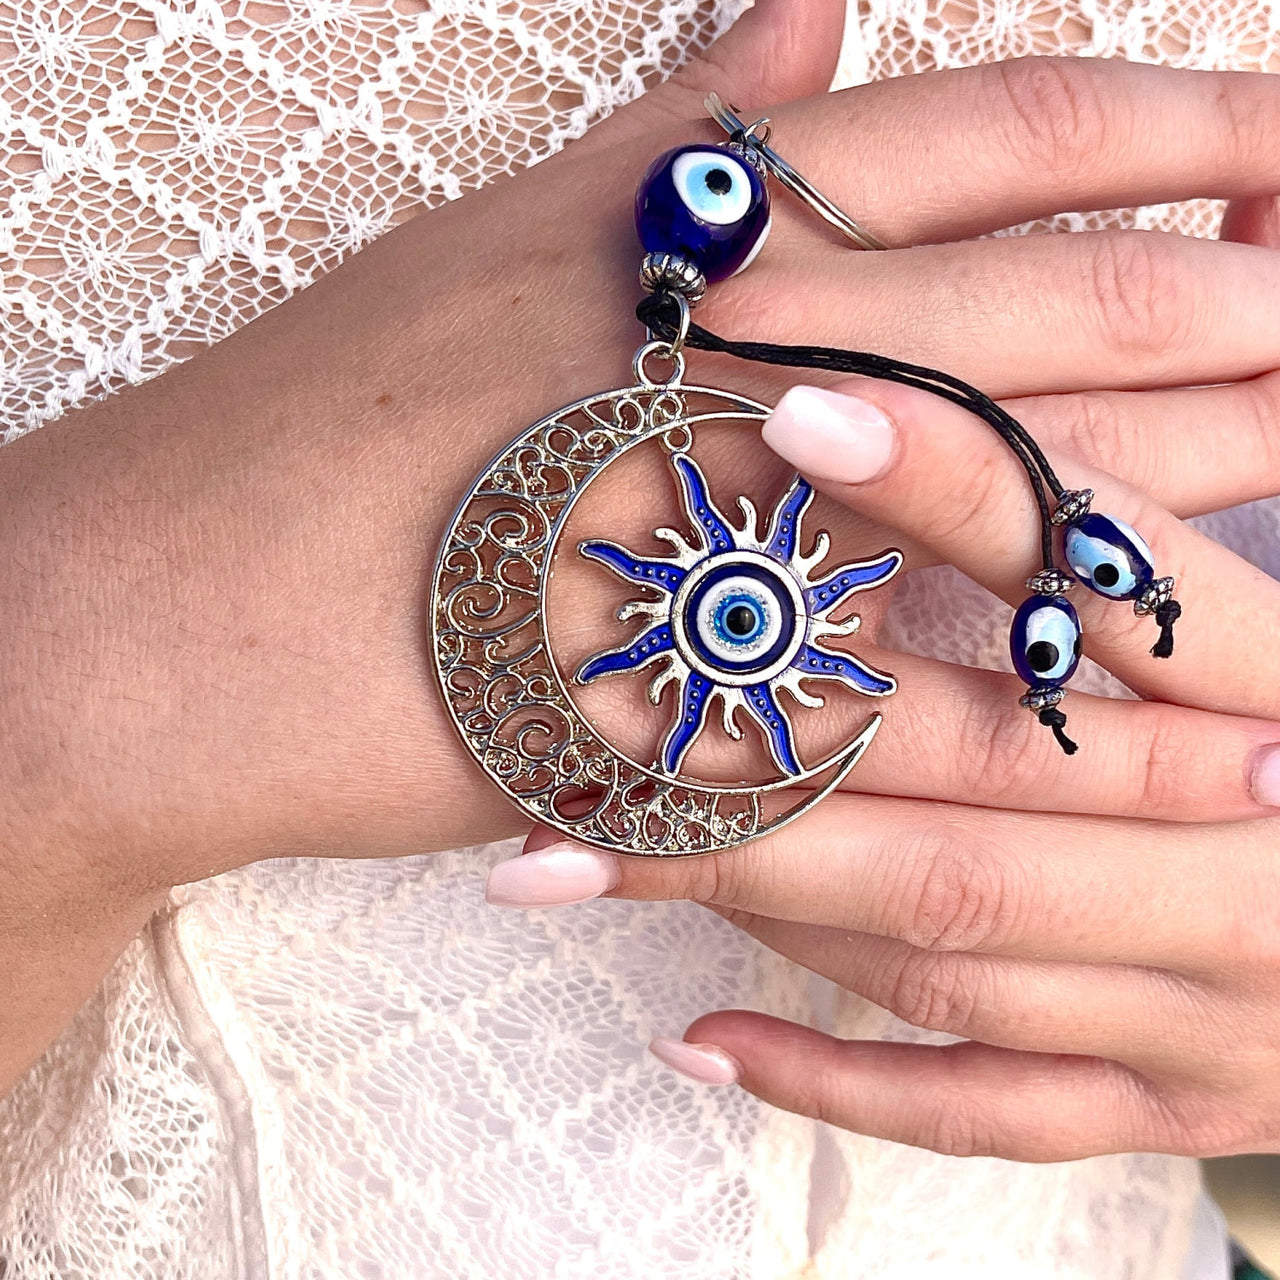 A woman wearing a bracelet with an evil eye, showcasing Evil Eye Keychain/Ornaments #Q198